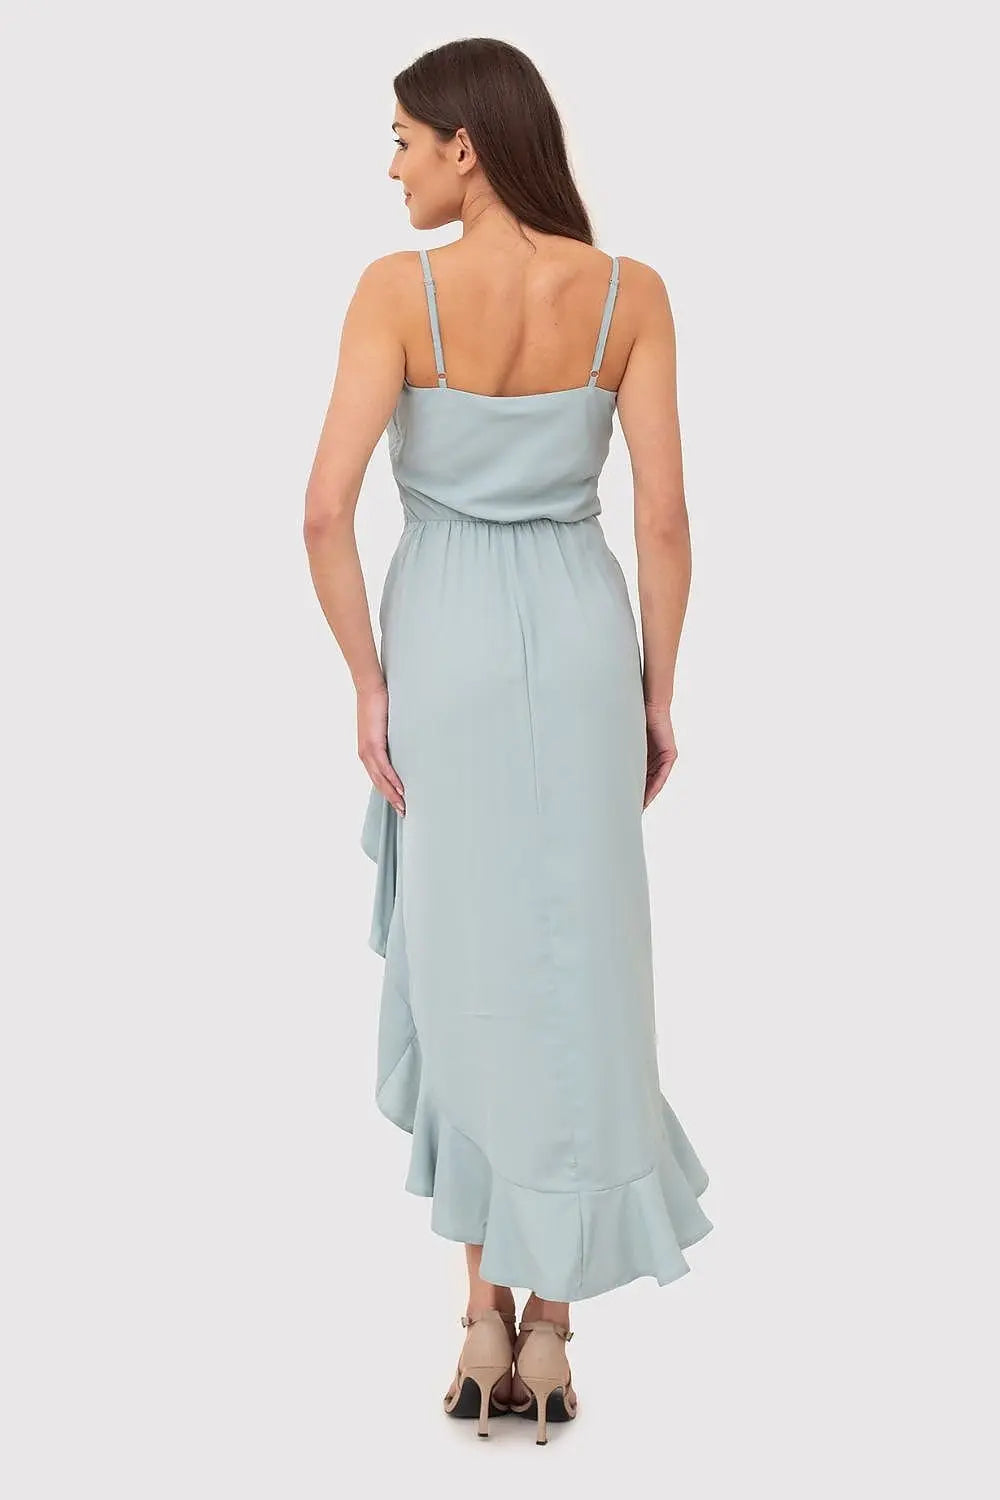 Summer Midi Cocktail dress - Venus Trendy Fashion Online